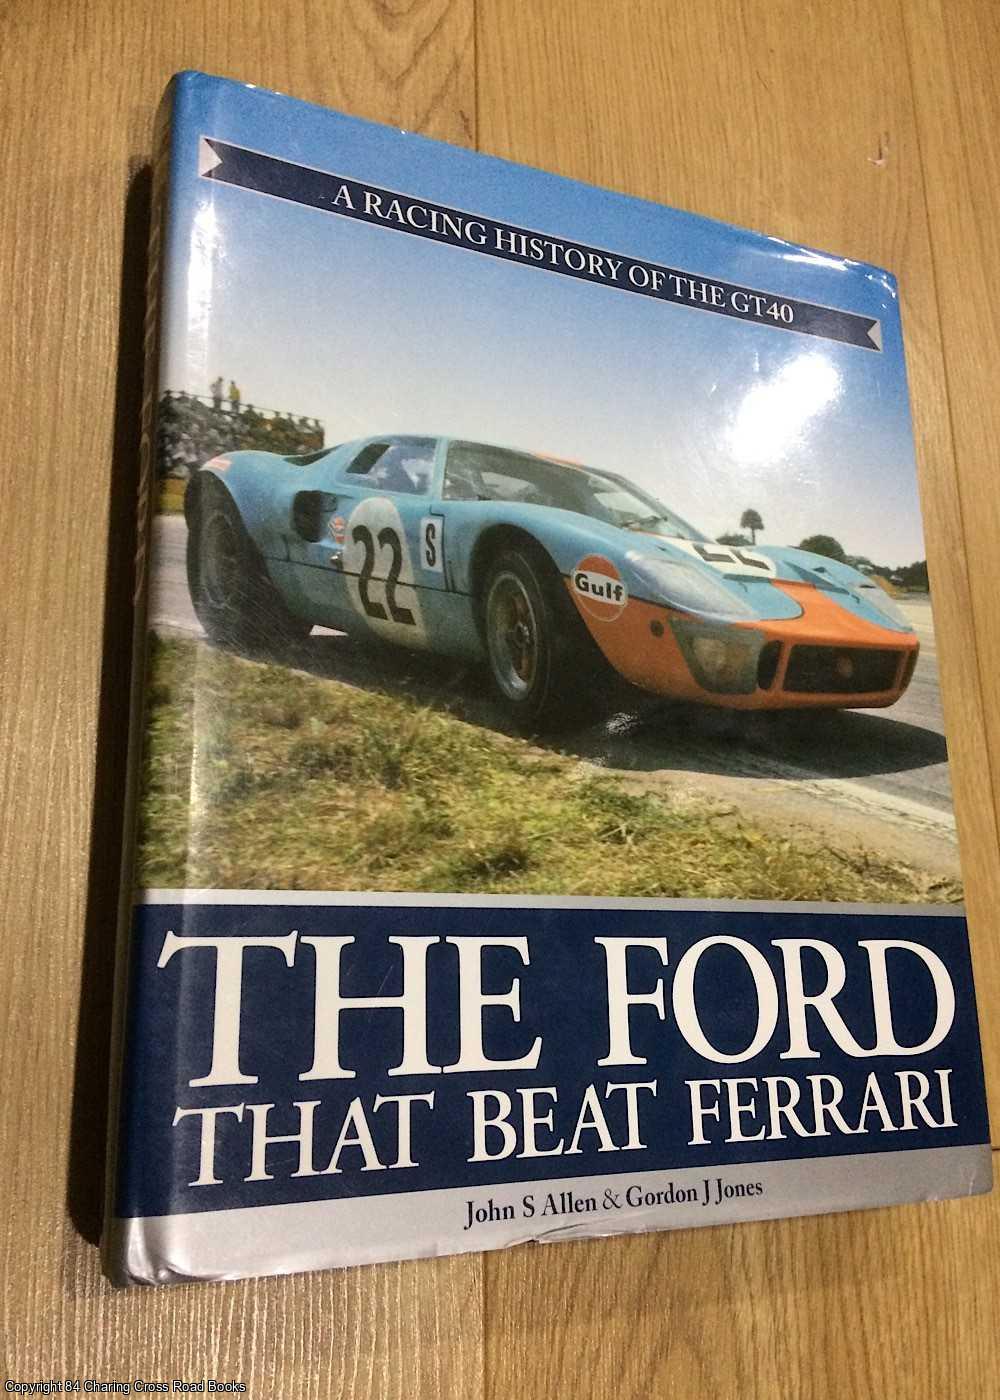 Allen, John, Jones, Gordon - The Ford That Beat Ferrari - A Racing History of the GT40